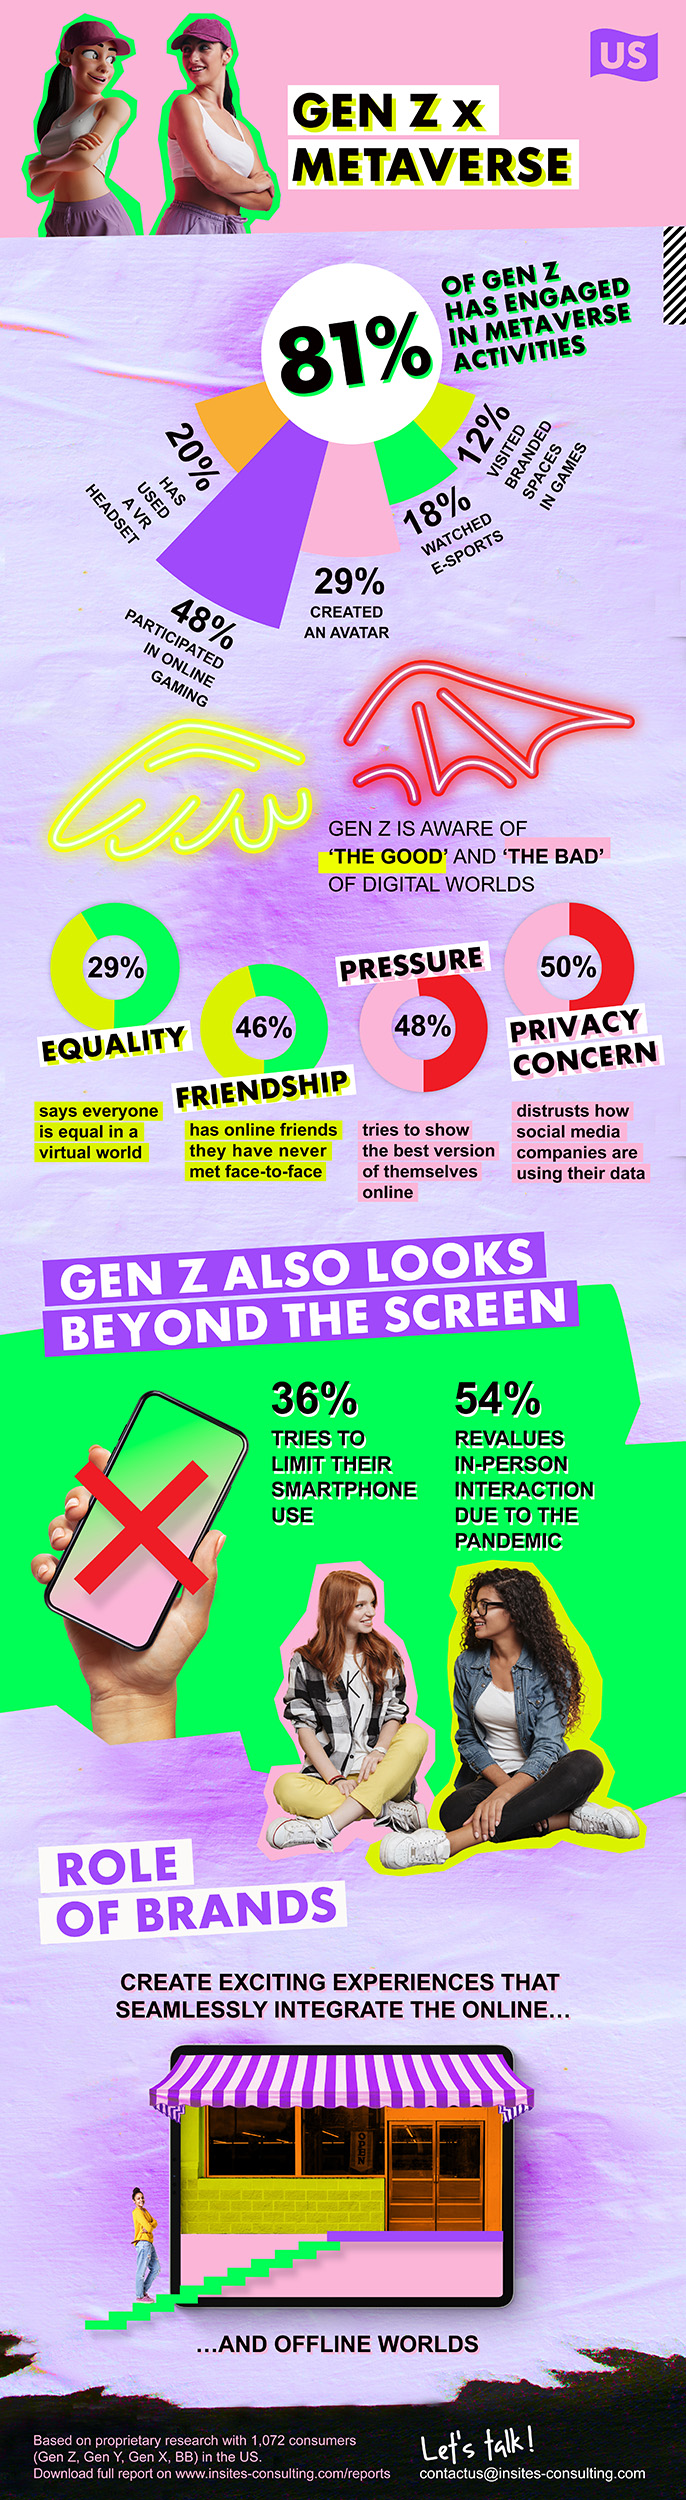 Gen Z x Metaverse Infographic US